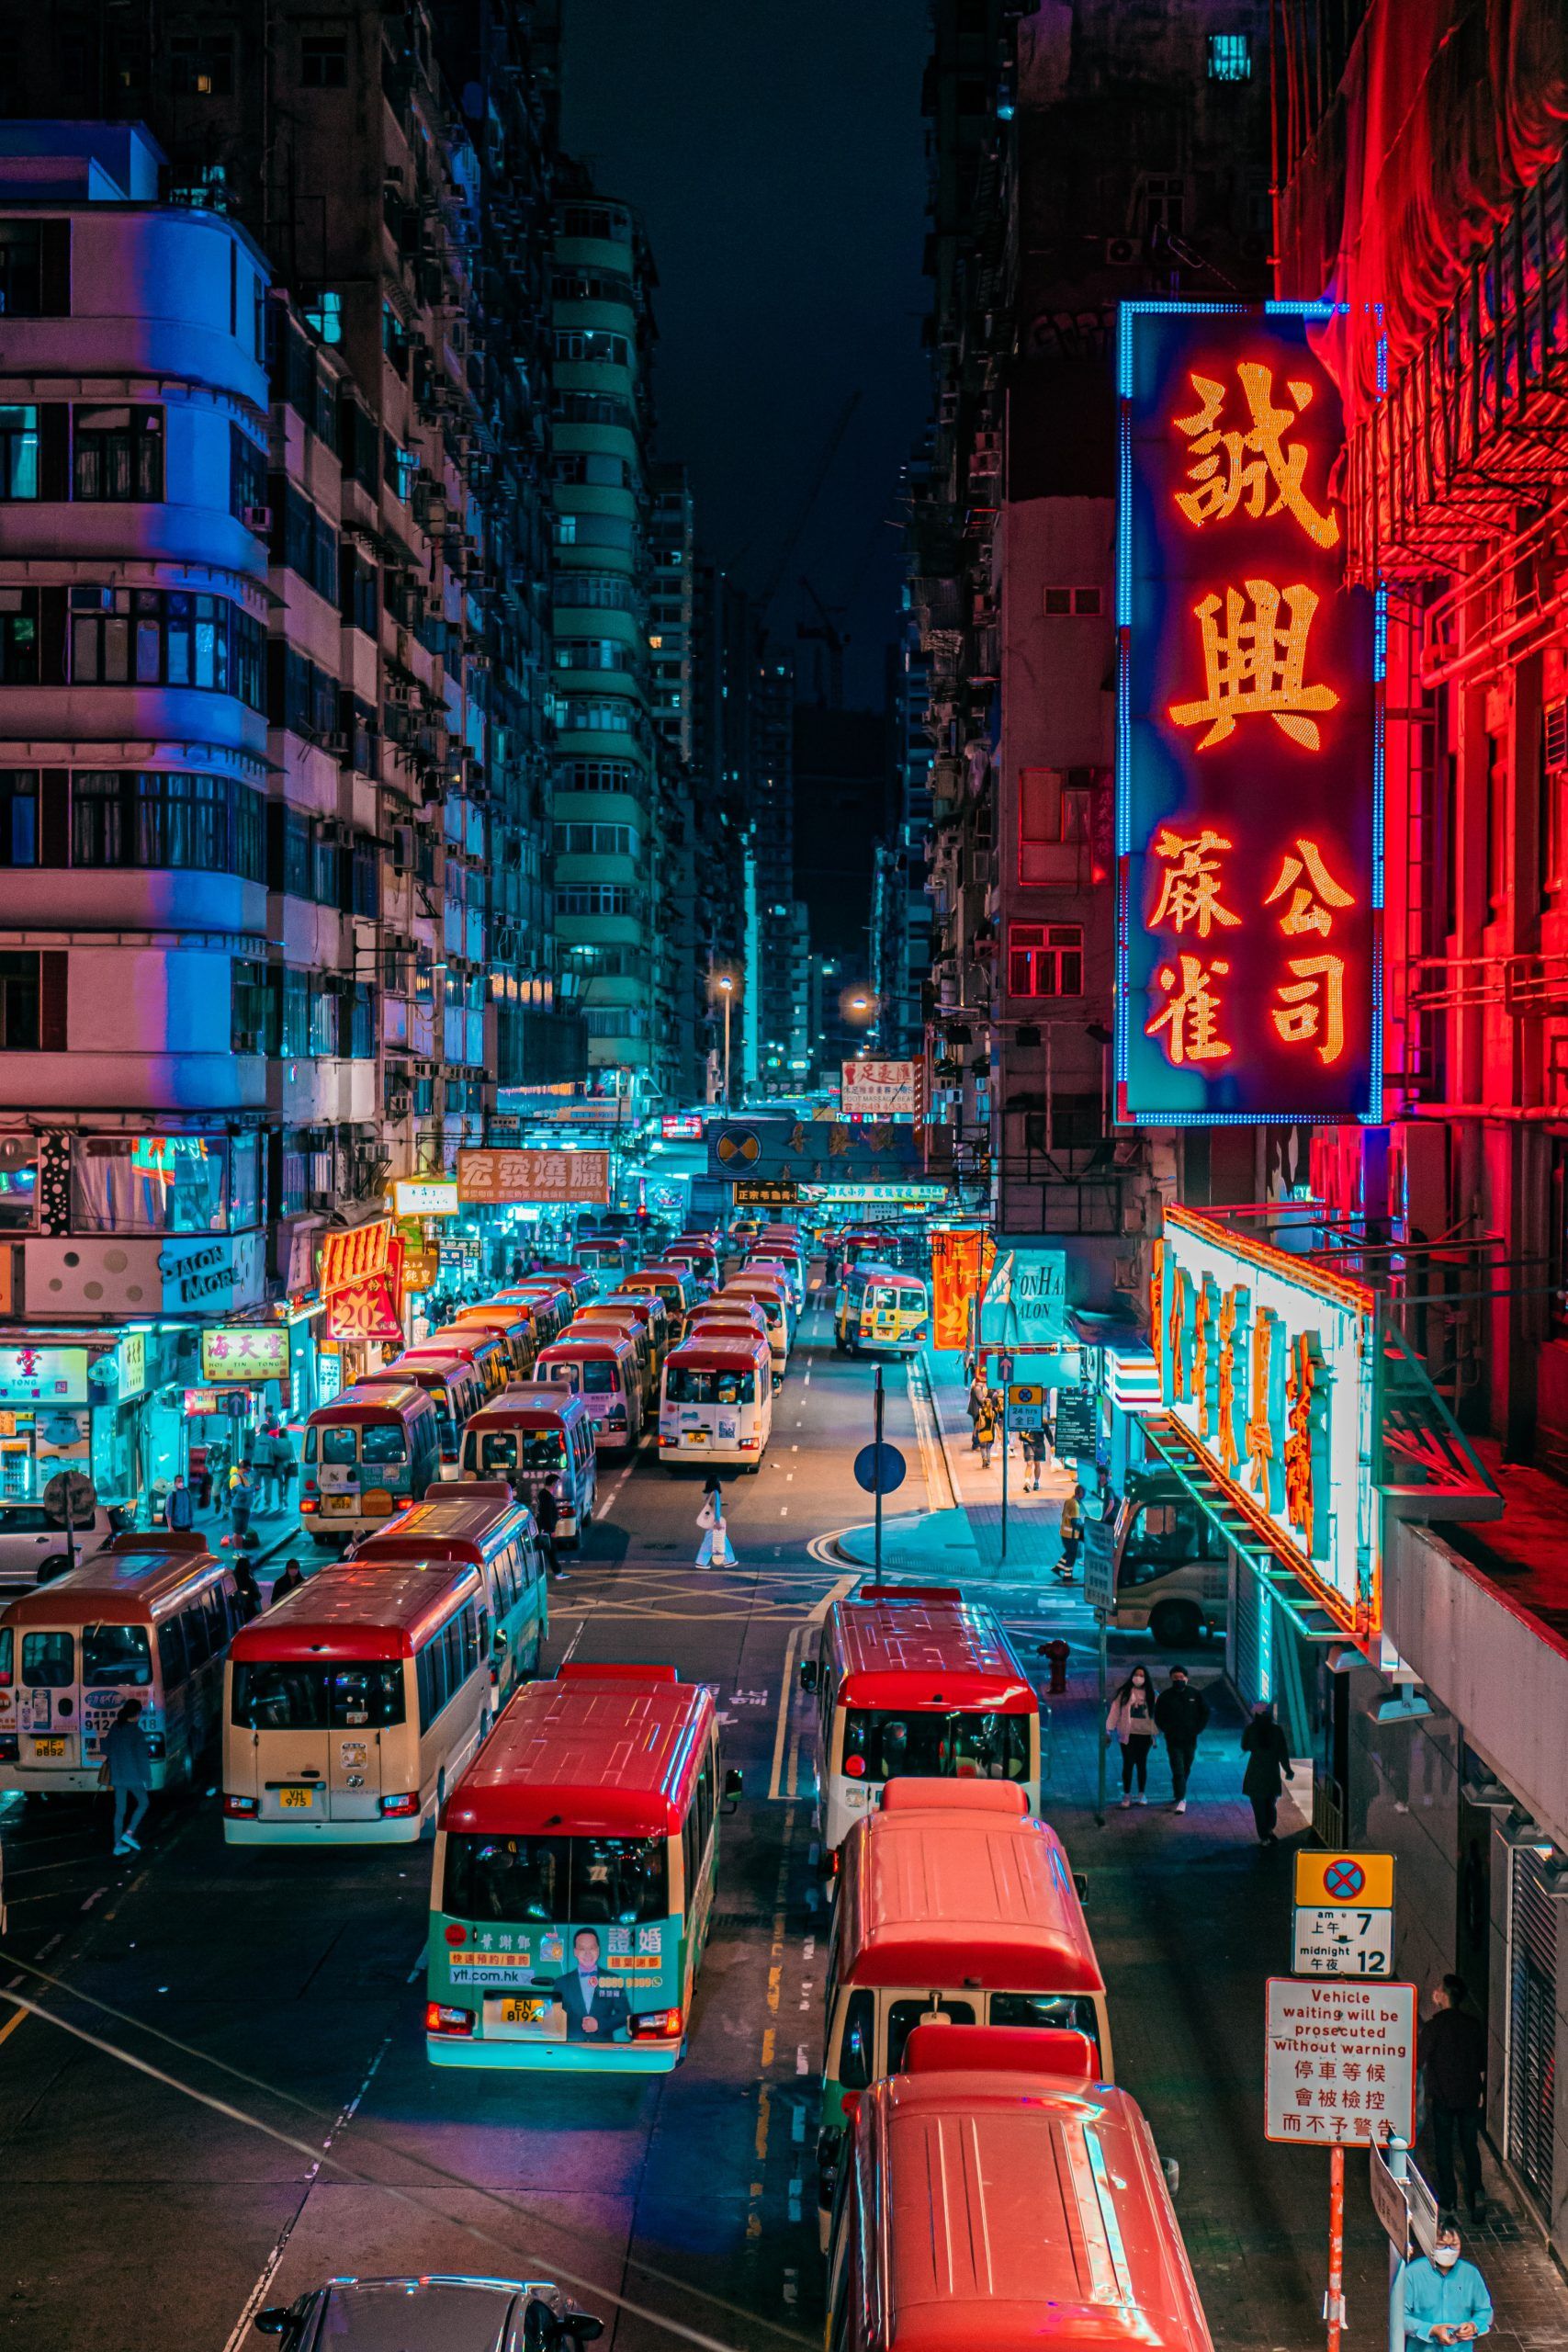 Vista nocturna de una calle de Hong Kong repleta de carteles luminosos y luces de neón de distintos colores